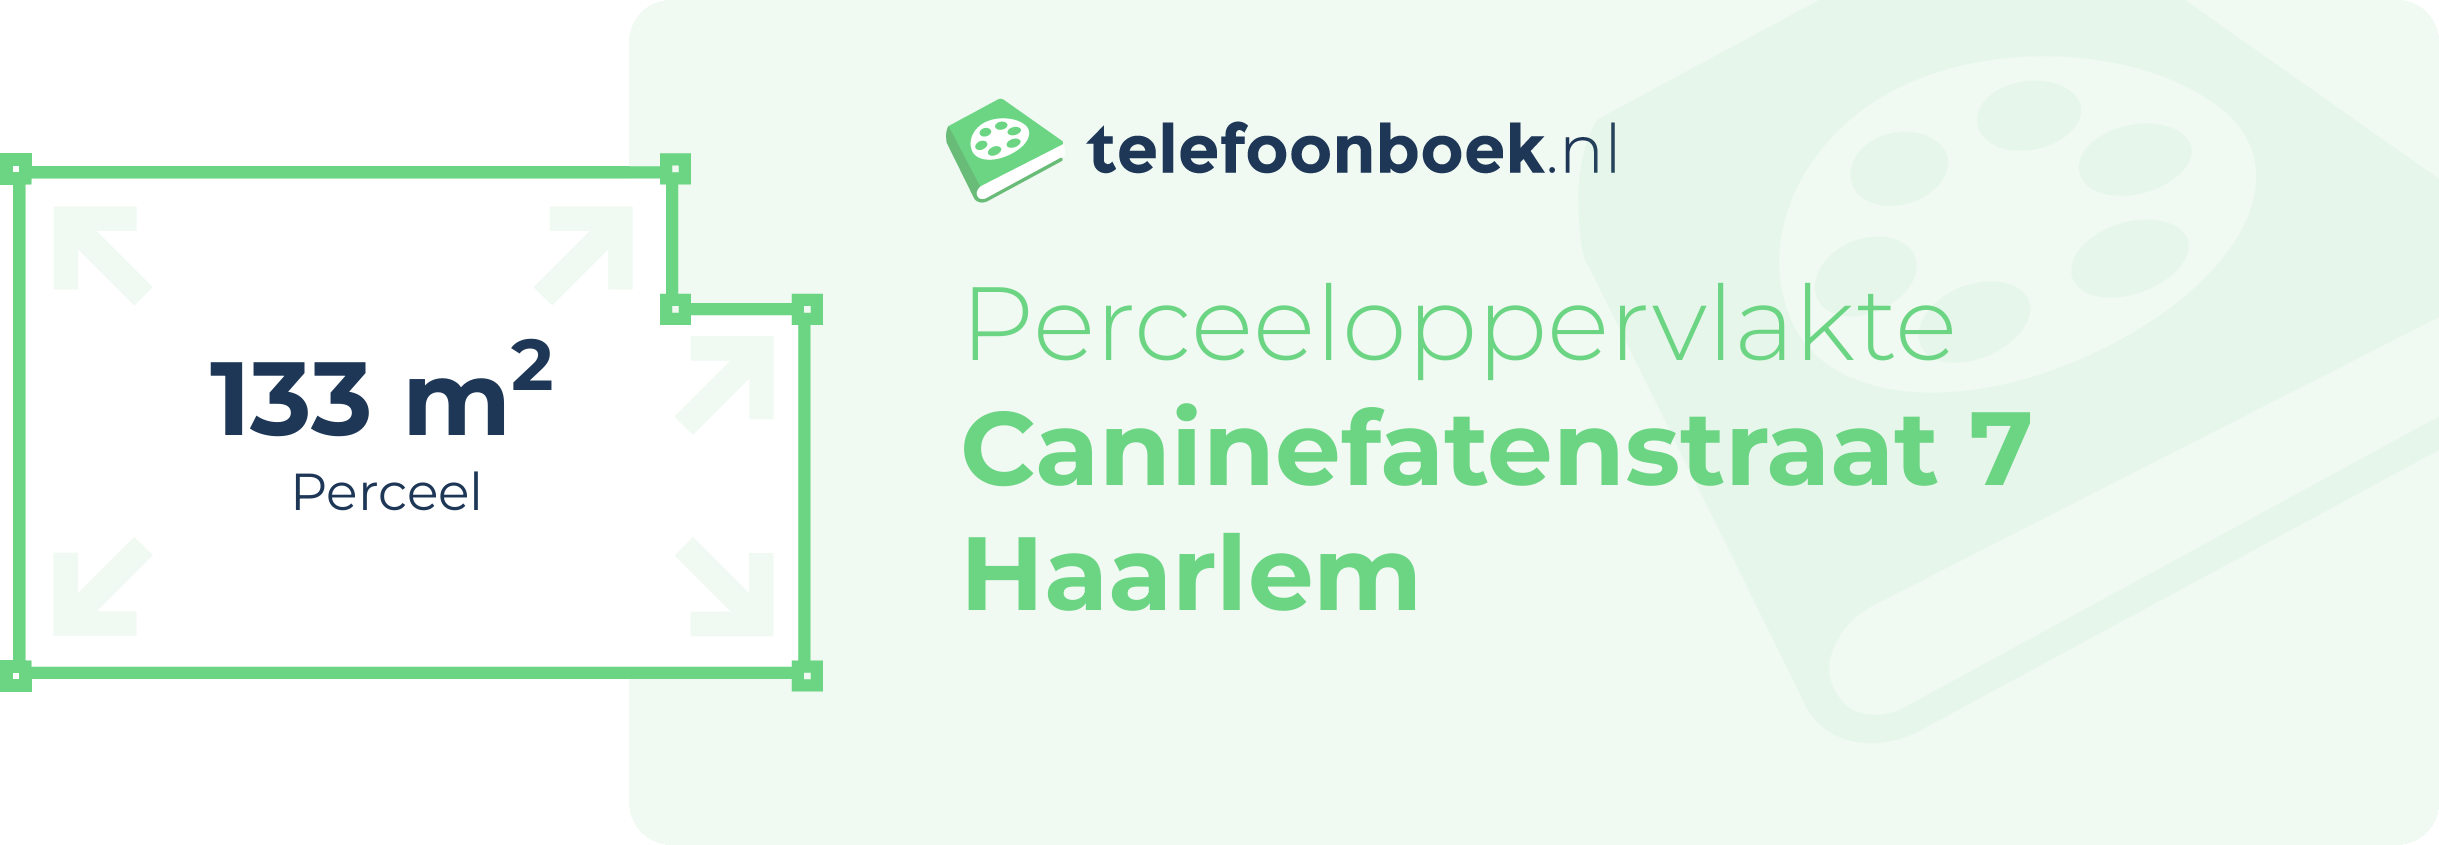 Perceeloppervlakte Caninefatenstraat 7 Haarlem